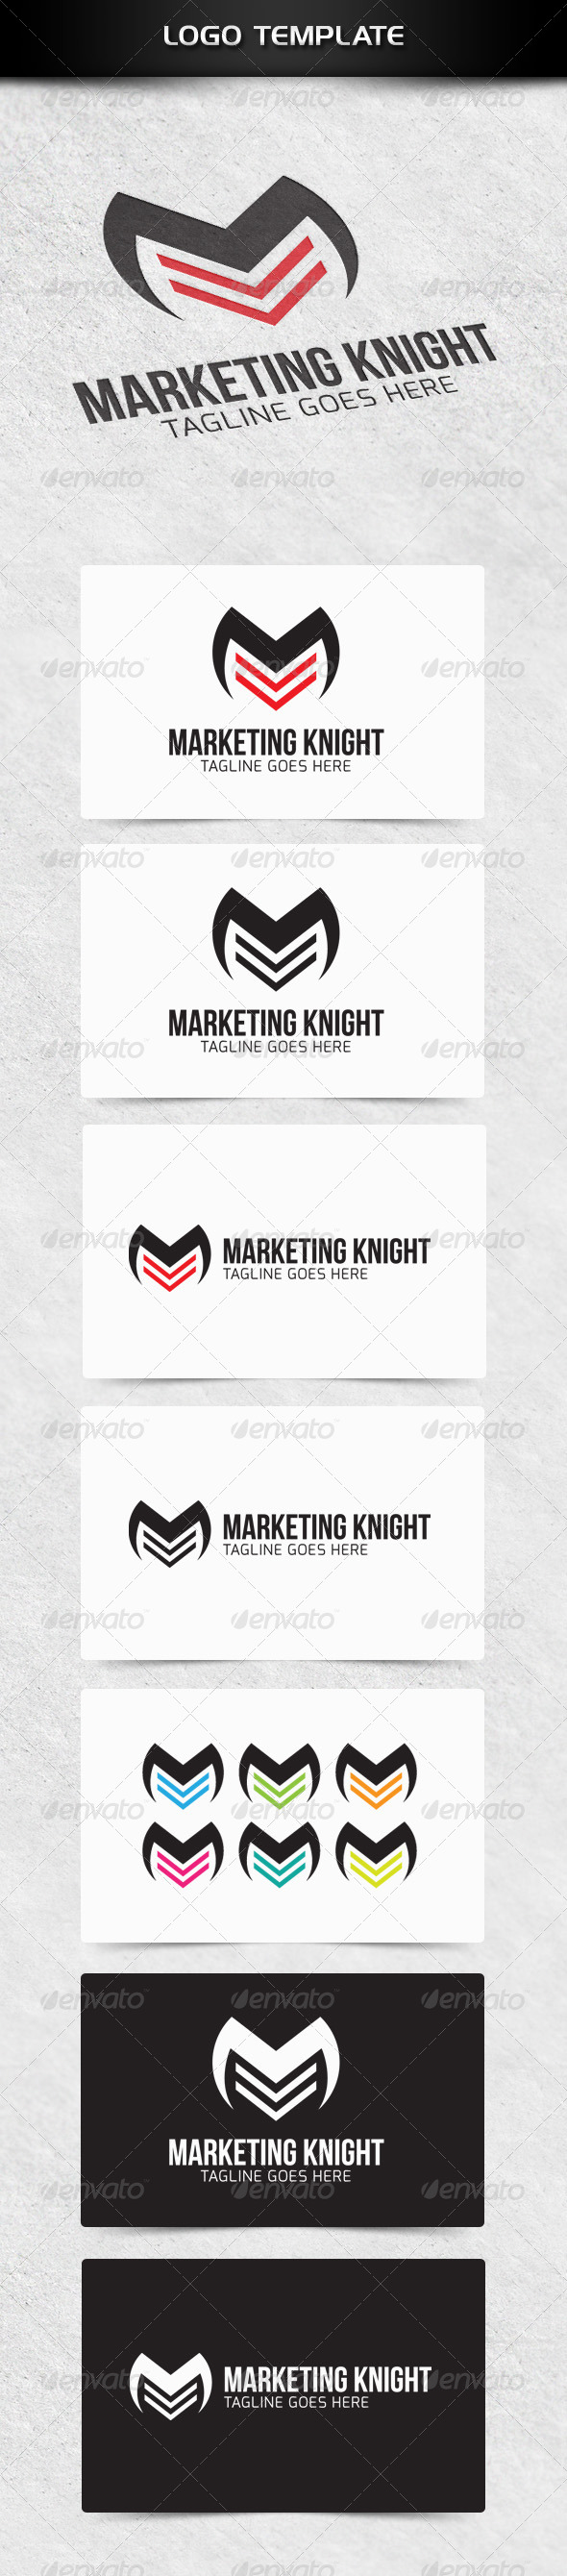 Marketing Knight